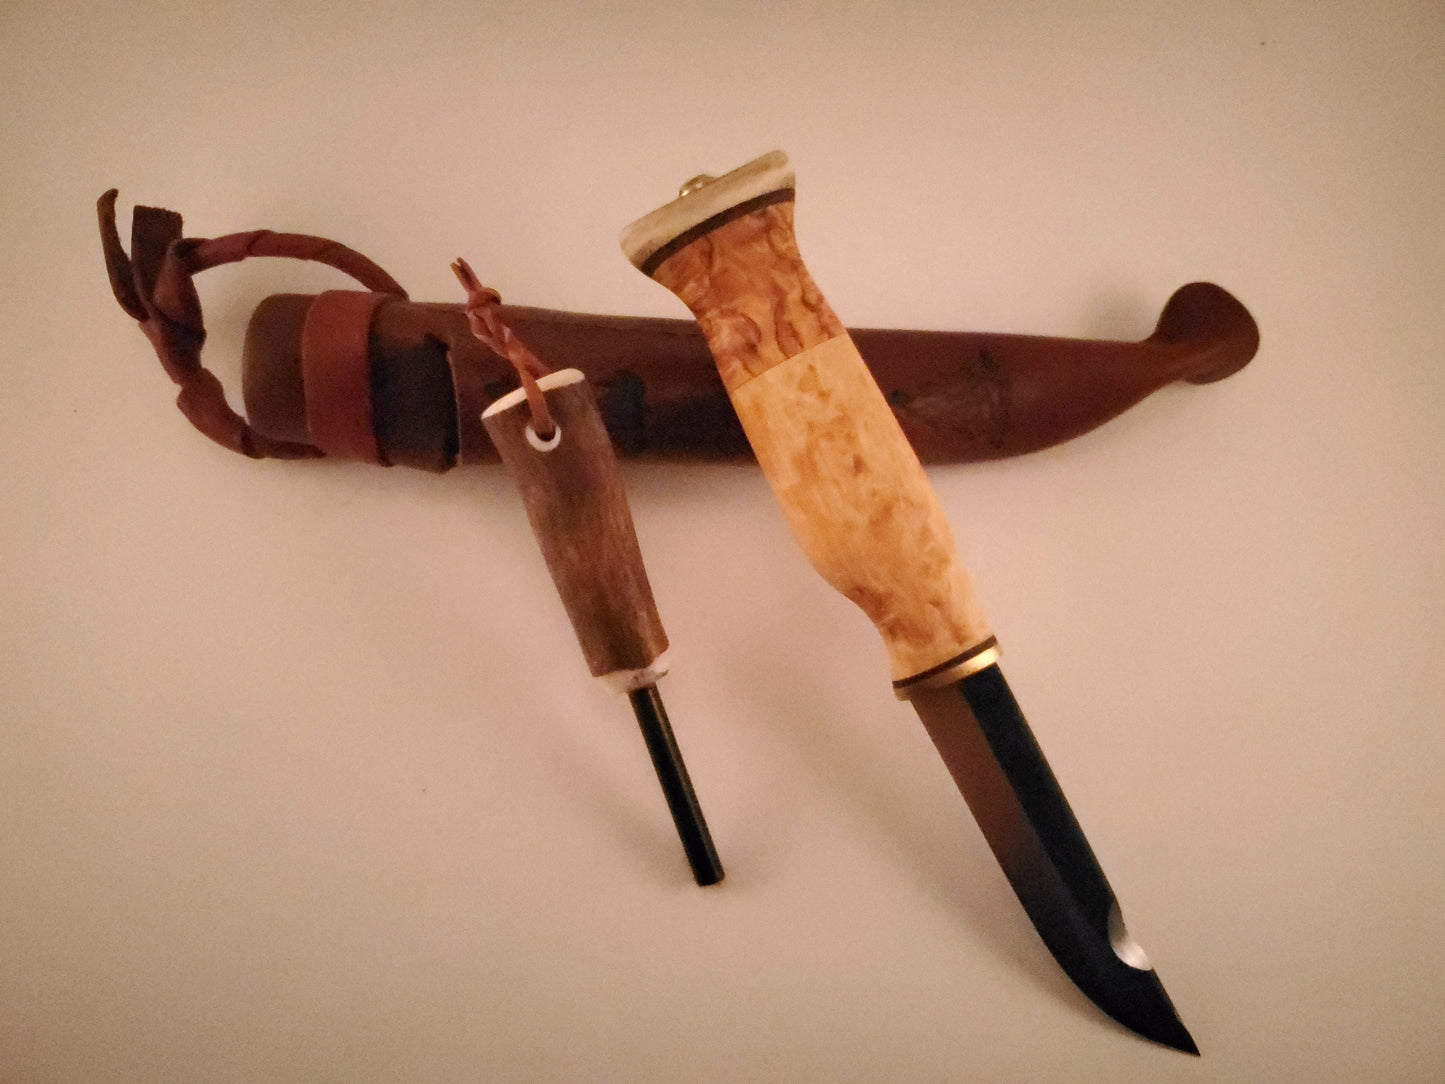 Wood Jewel Utility Knife With Firesteel Bushcraft Outdoor Puukko Knife